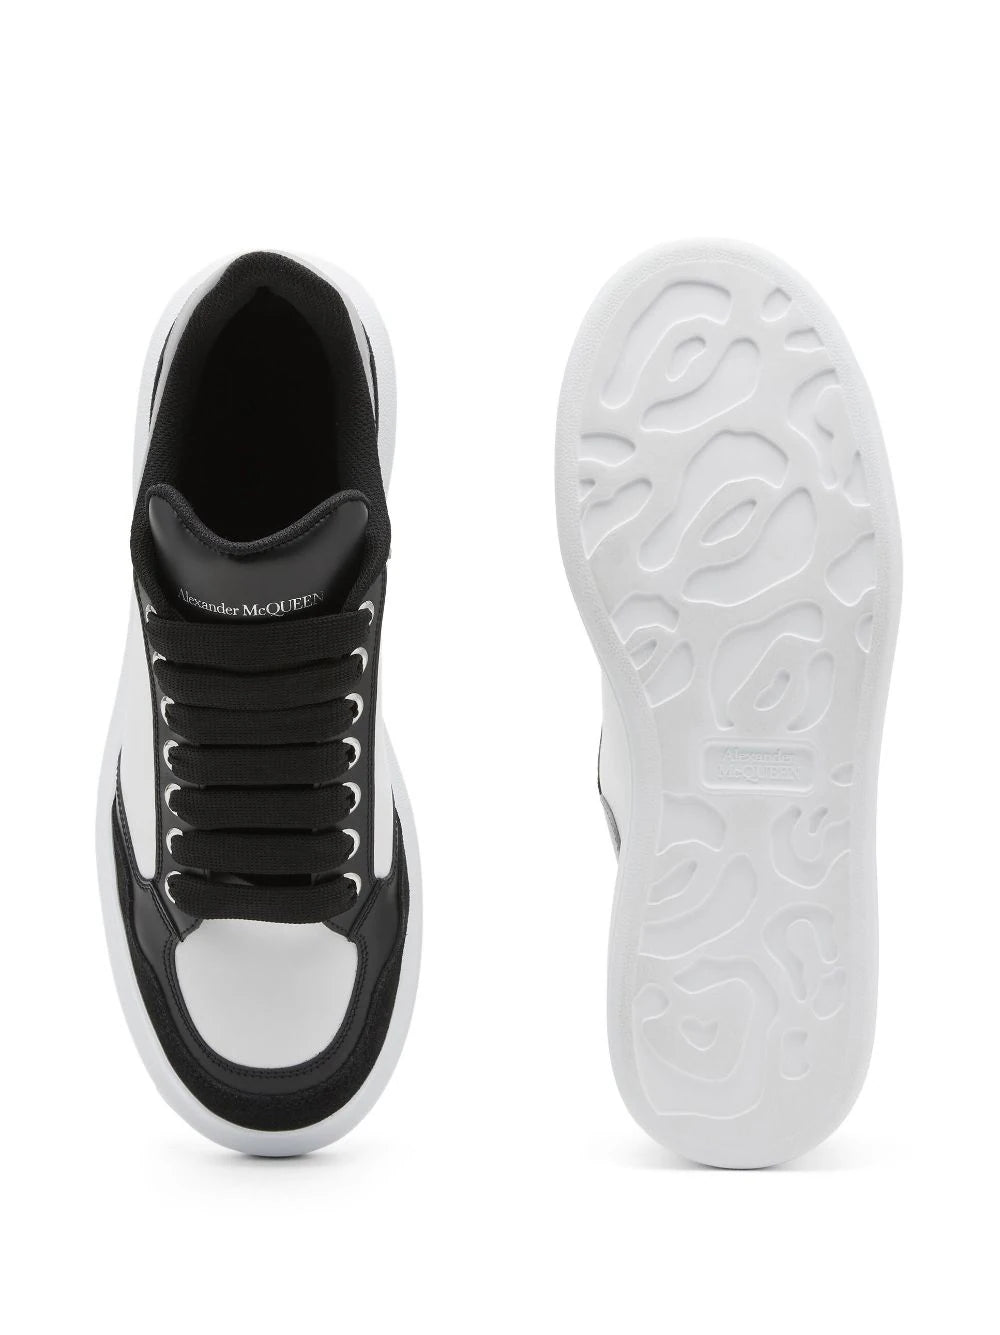 ALEXANDER MCQUEEN MEN Two Tone Oversized Low Top Sneakers Black/White/Grey - MAISONDEFASHION.COM